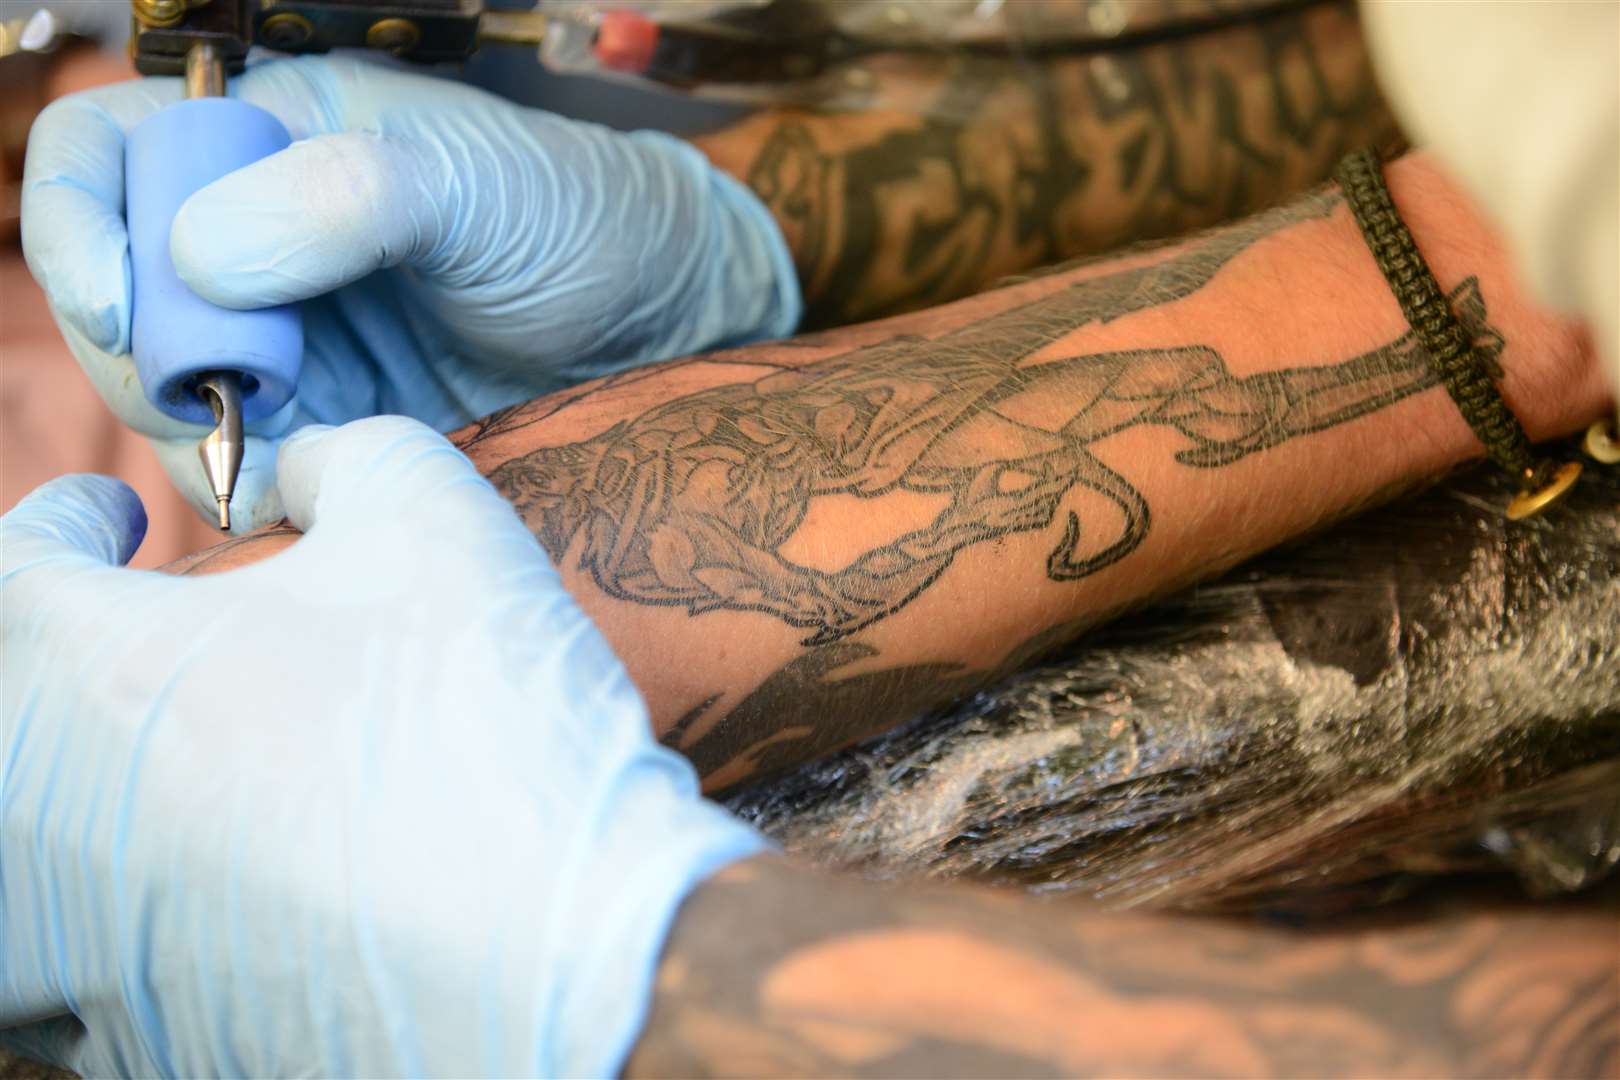 A tattoo artist at work